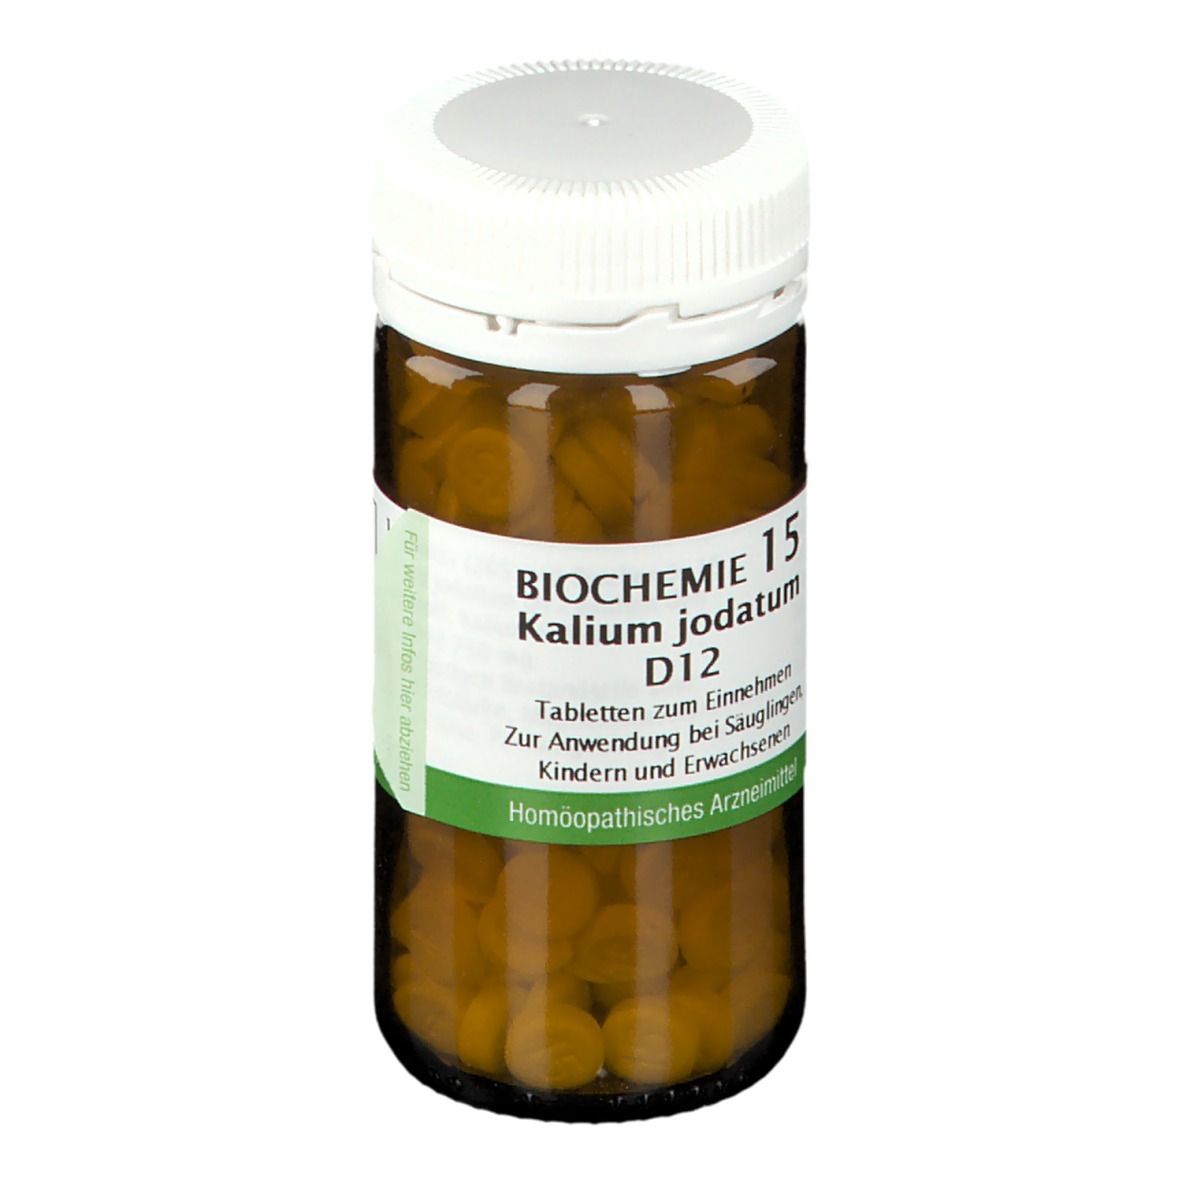 BIOCHEMIE 15 Kalium jodatum D12 Tabletten